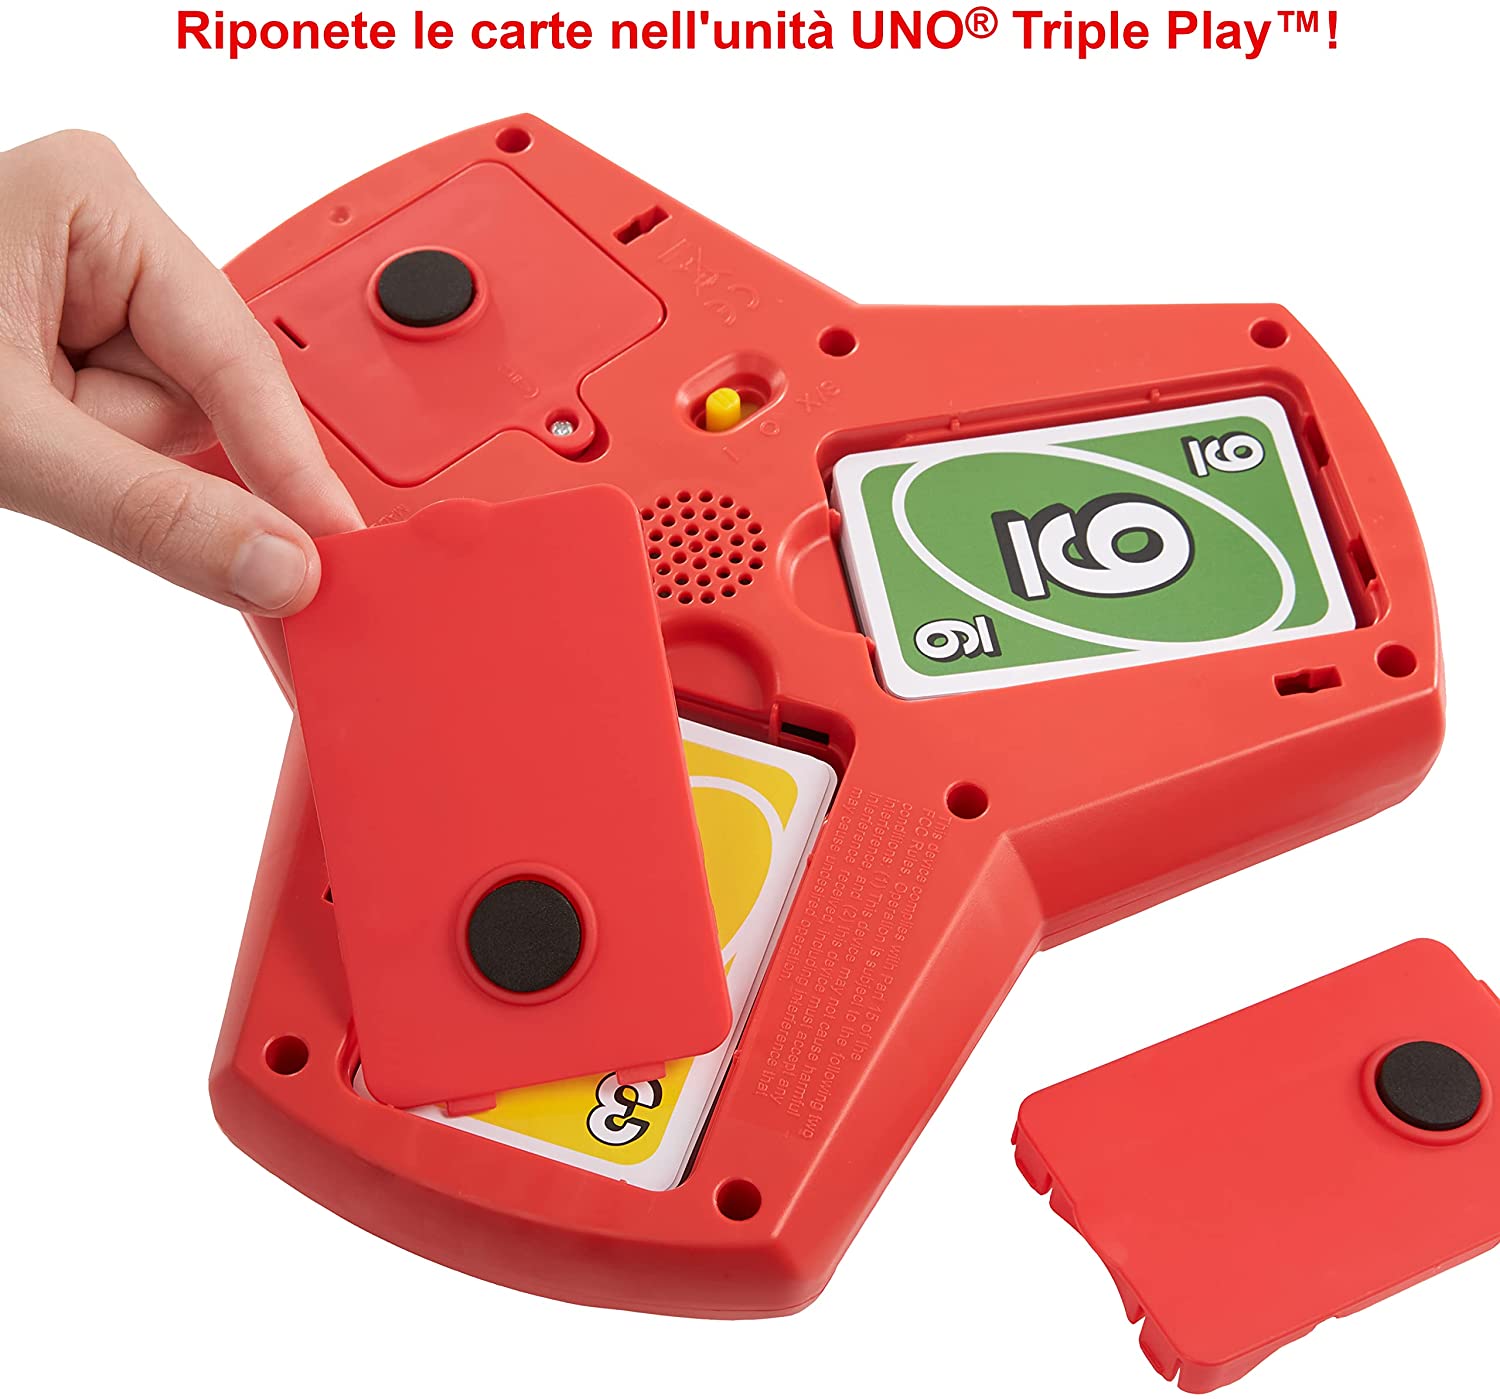 Mattel Games - UNO Triple Play